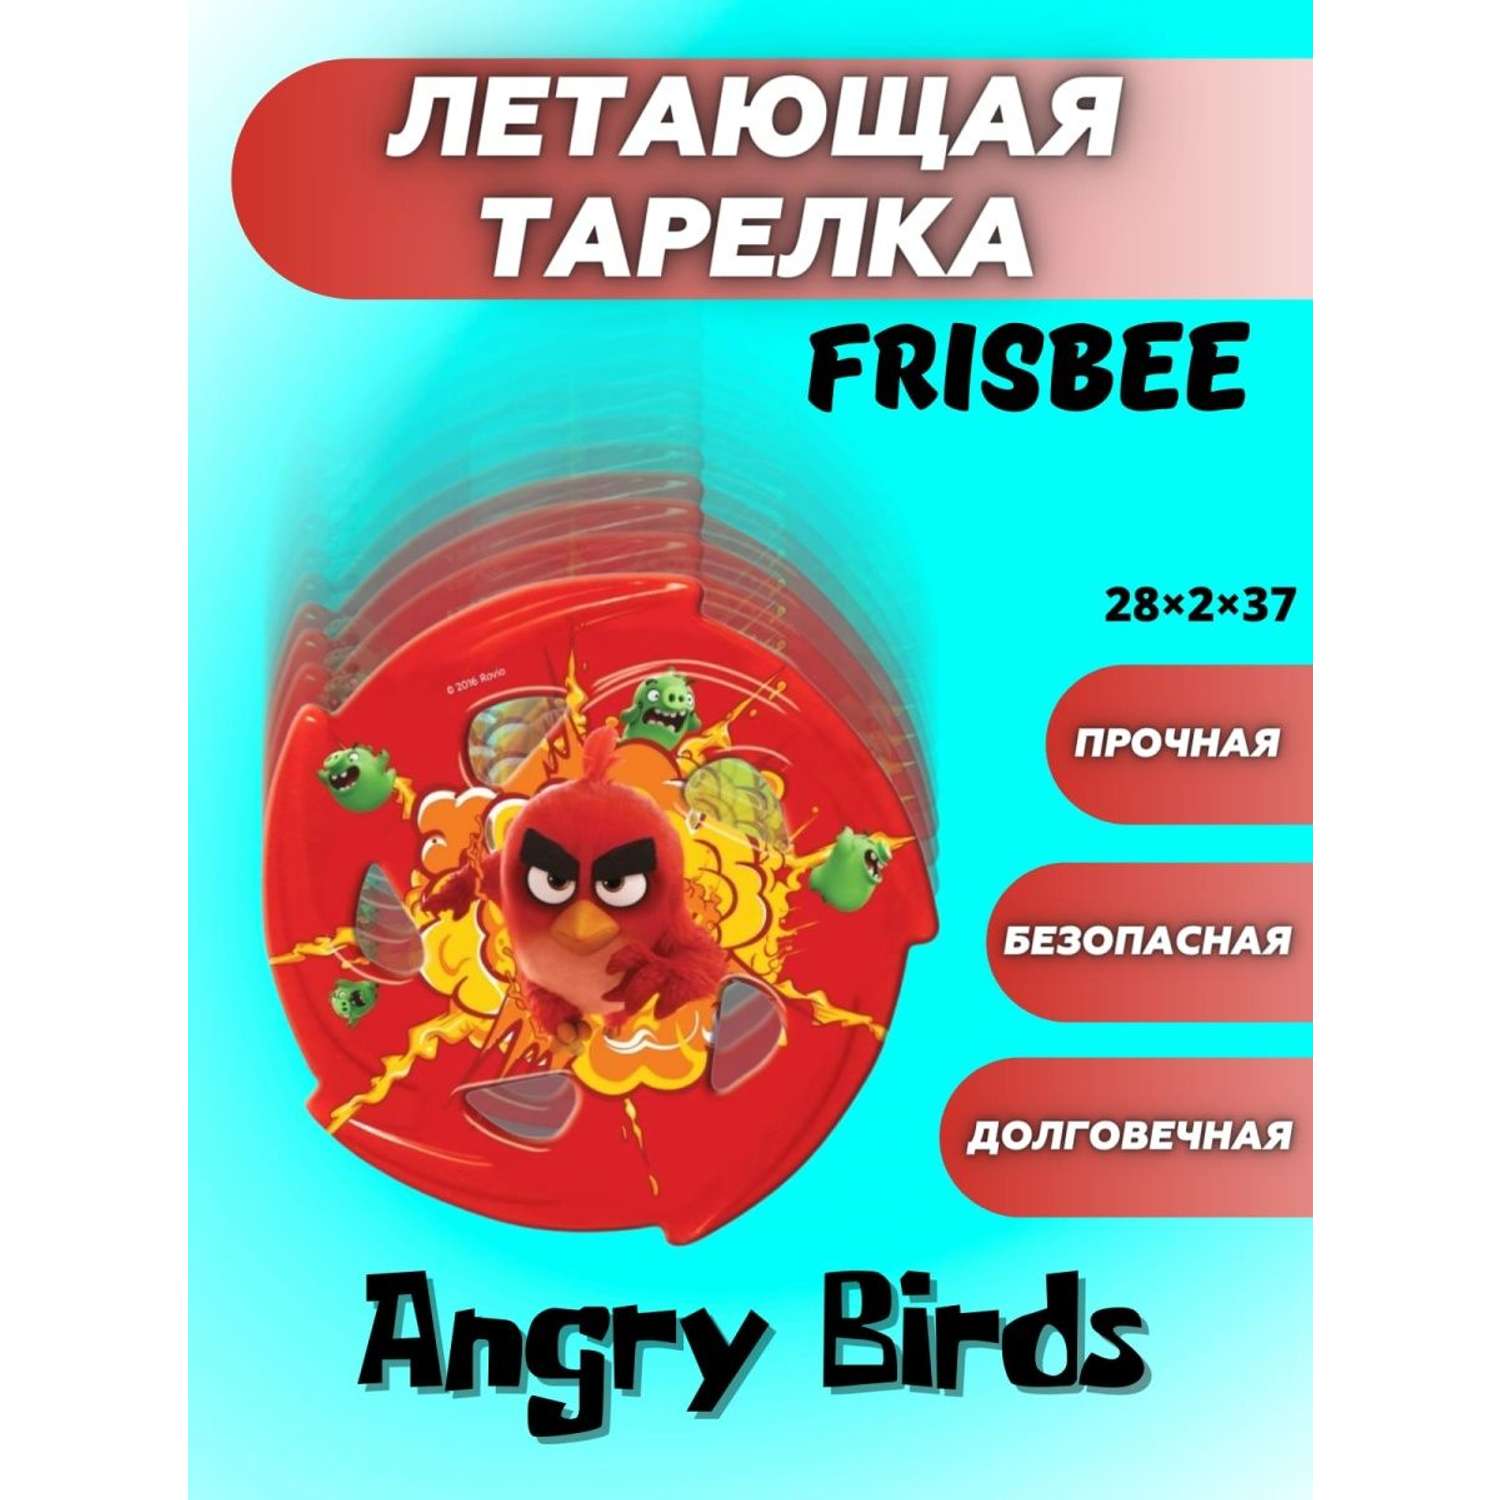 Фрисби InSummer Летающая тарелка Angry Birds - фото 2